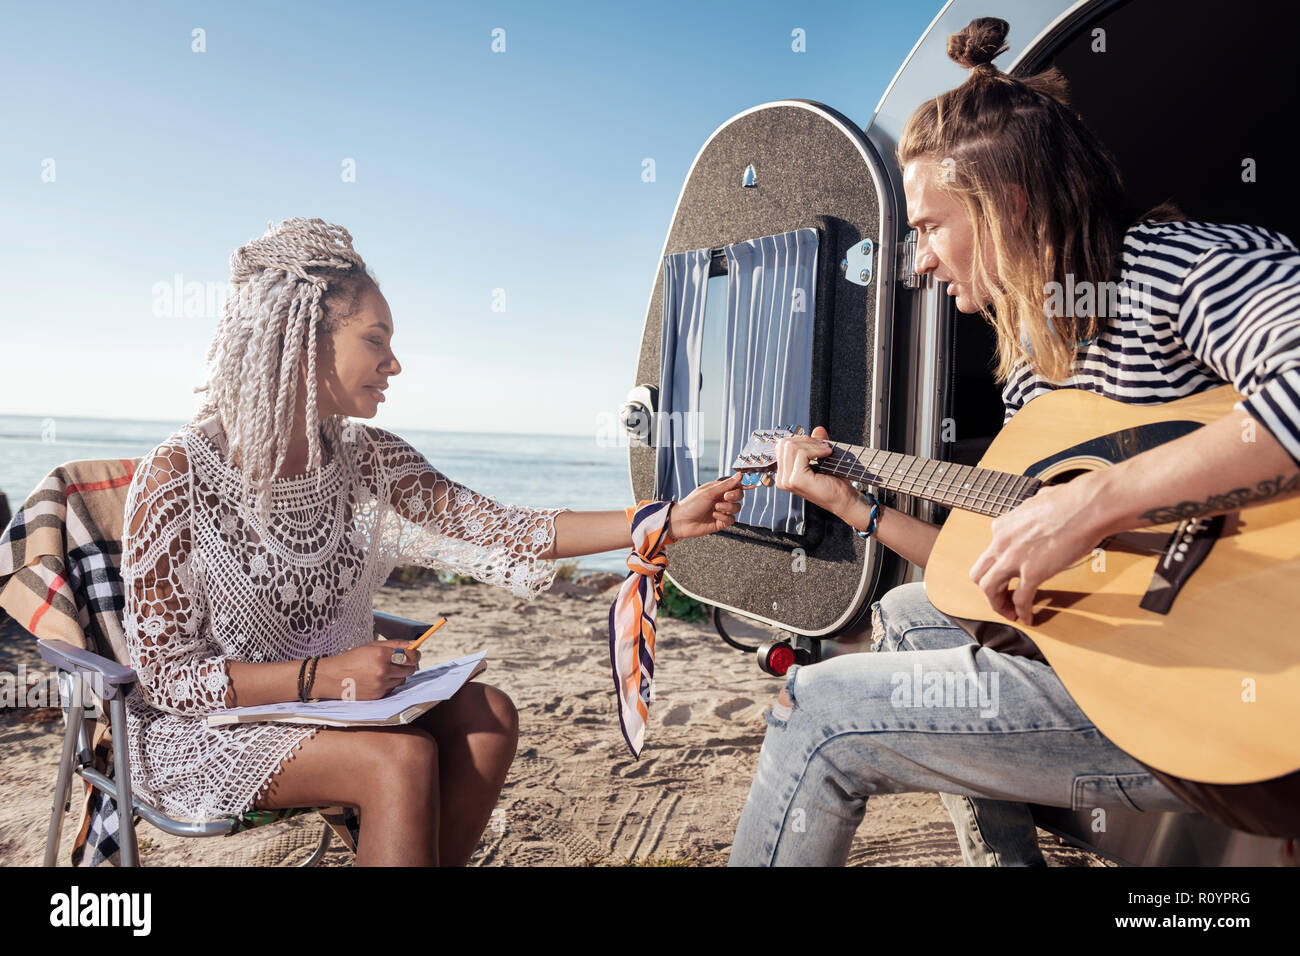 Girlfriend with white dreadlocks tuning the guitar for her boyfriend Stock Photo